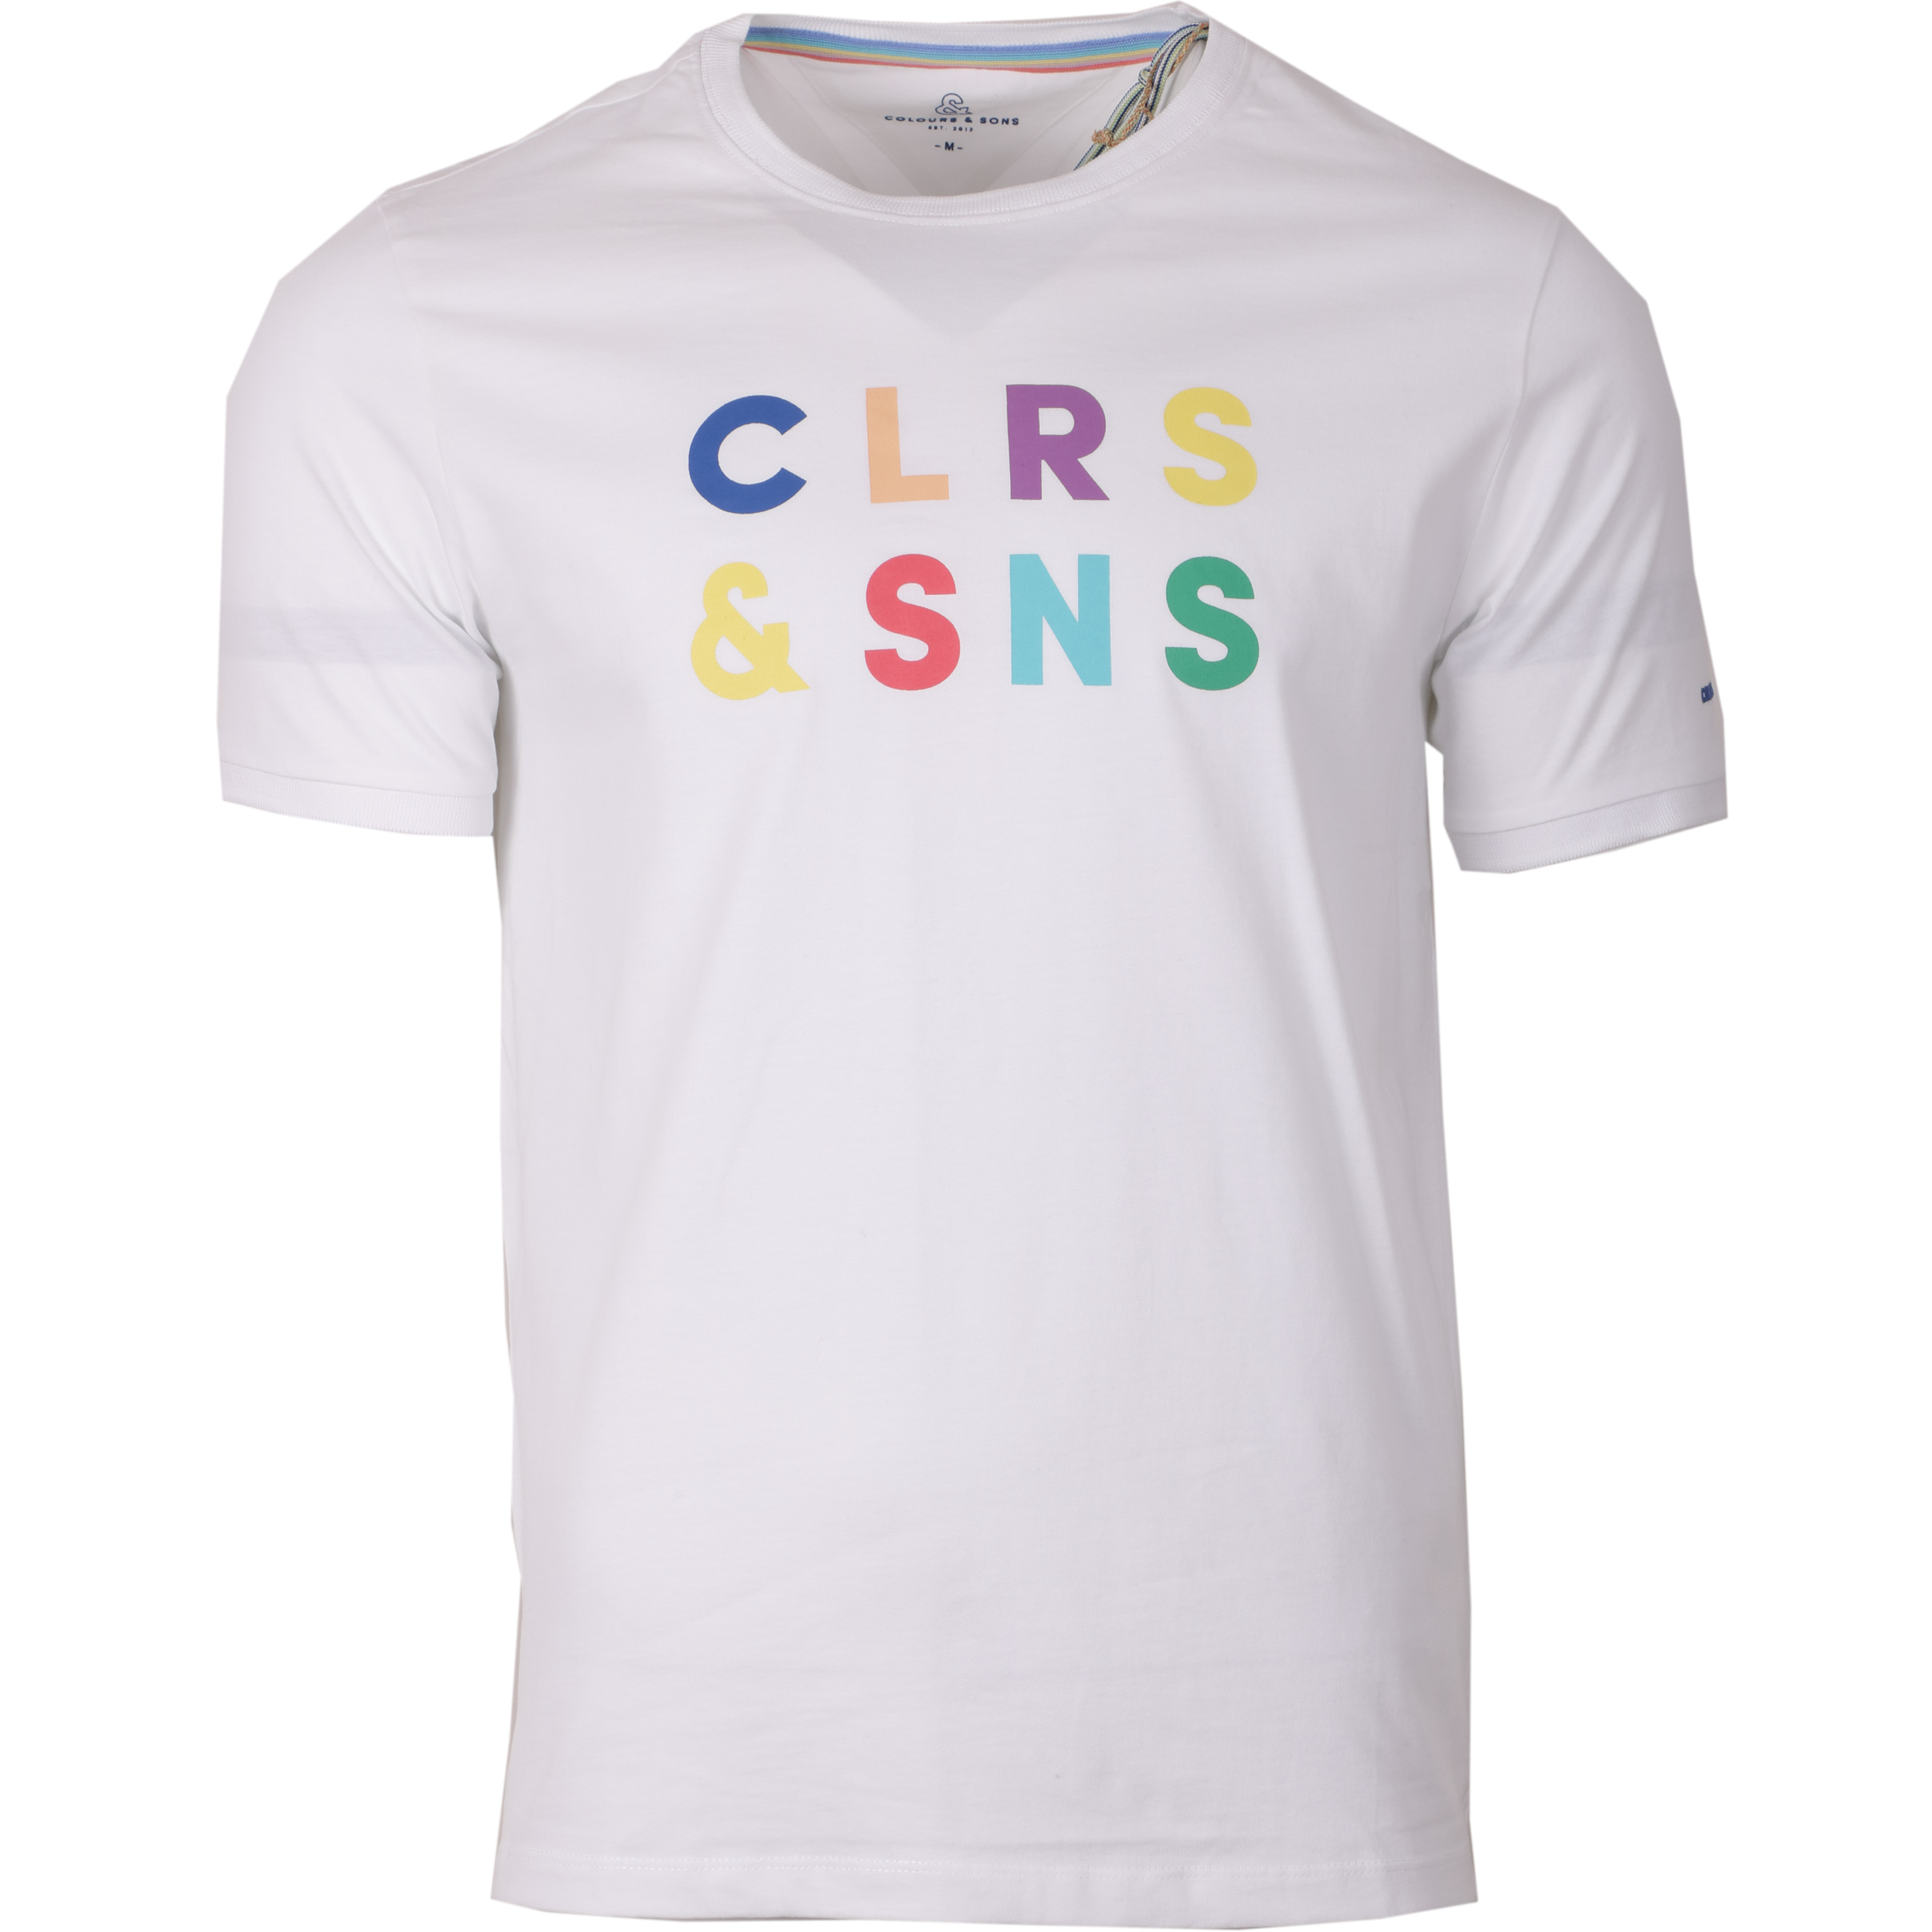 Colours & Sons Herren T-Shirt front Print M weiß